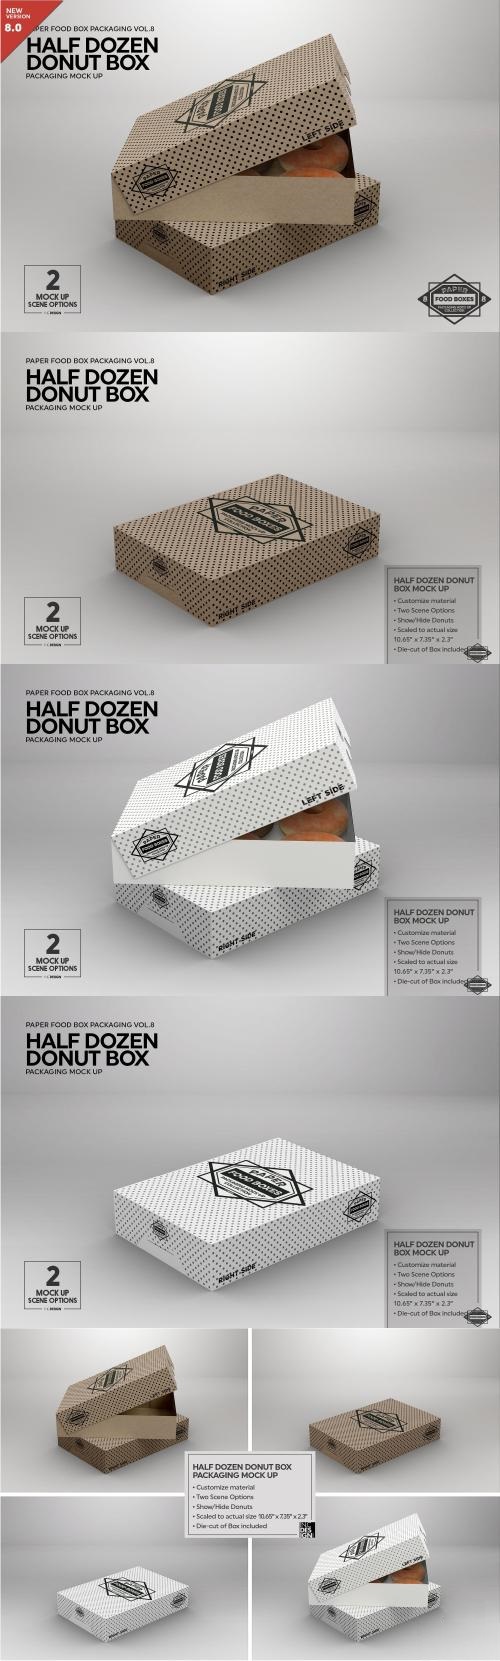 Half Dozen Donut Box Mock Up - 2181807